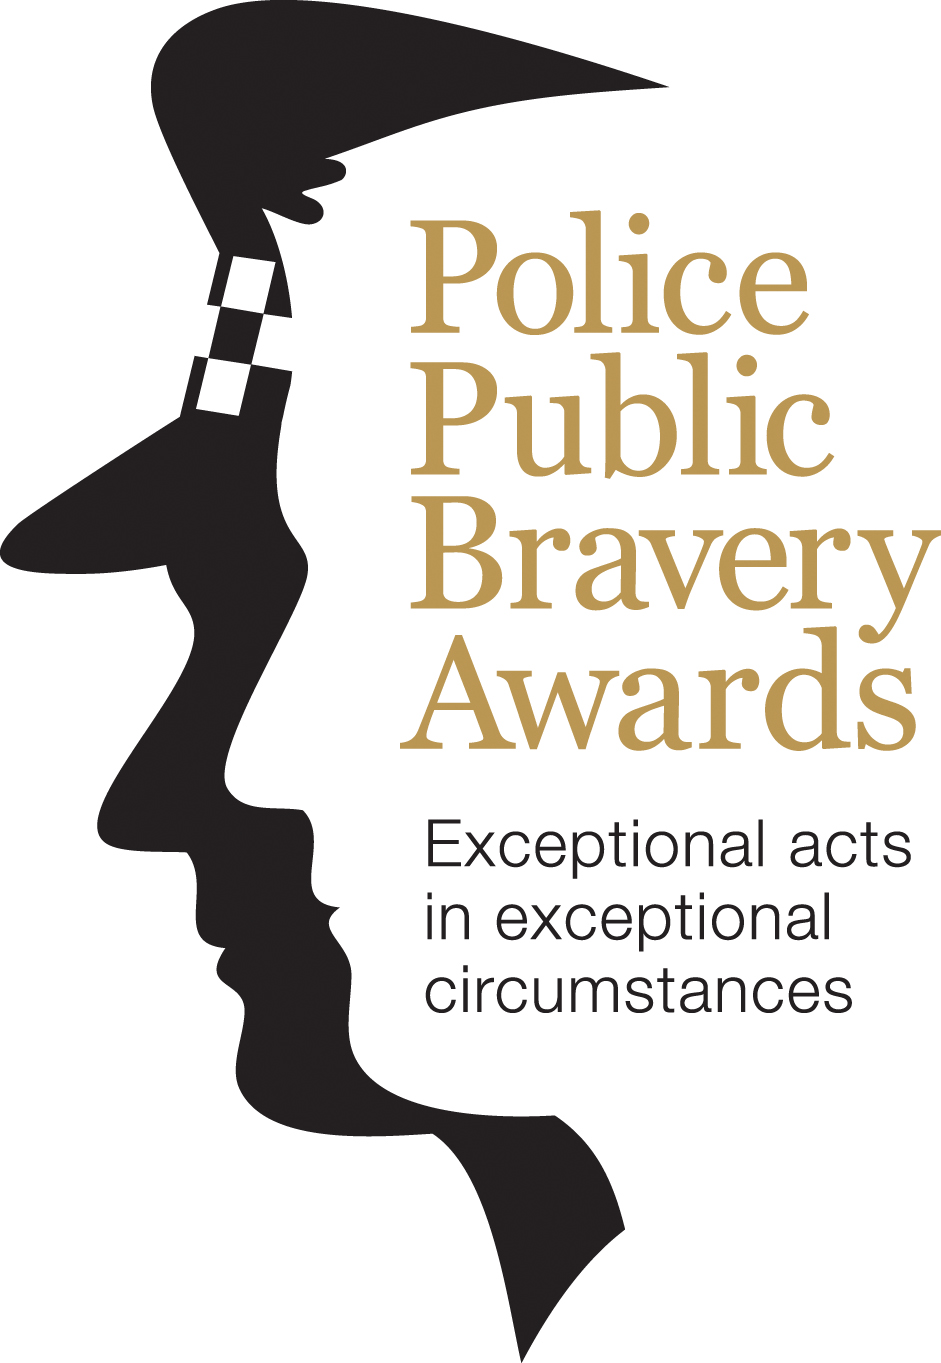 National Police Public Bravery Awards